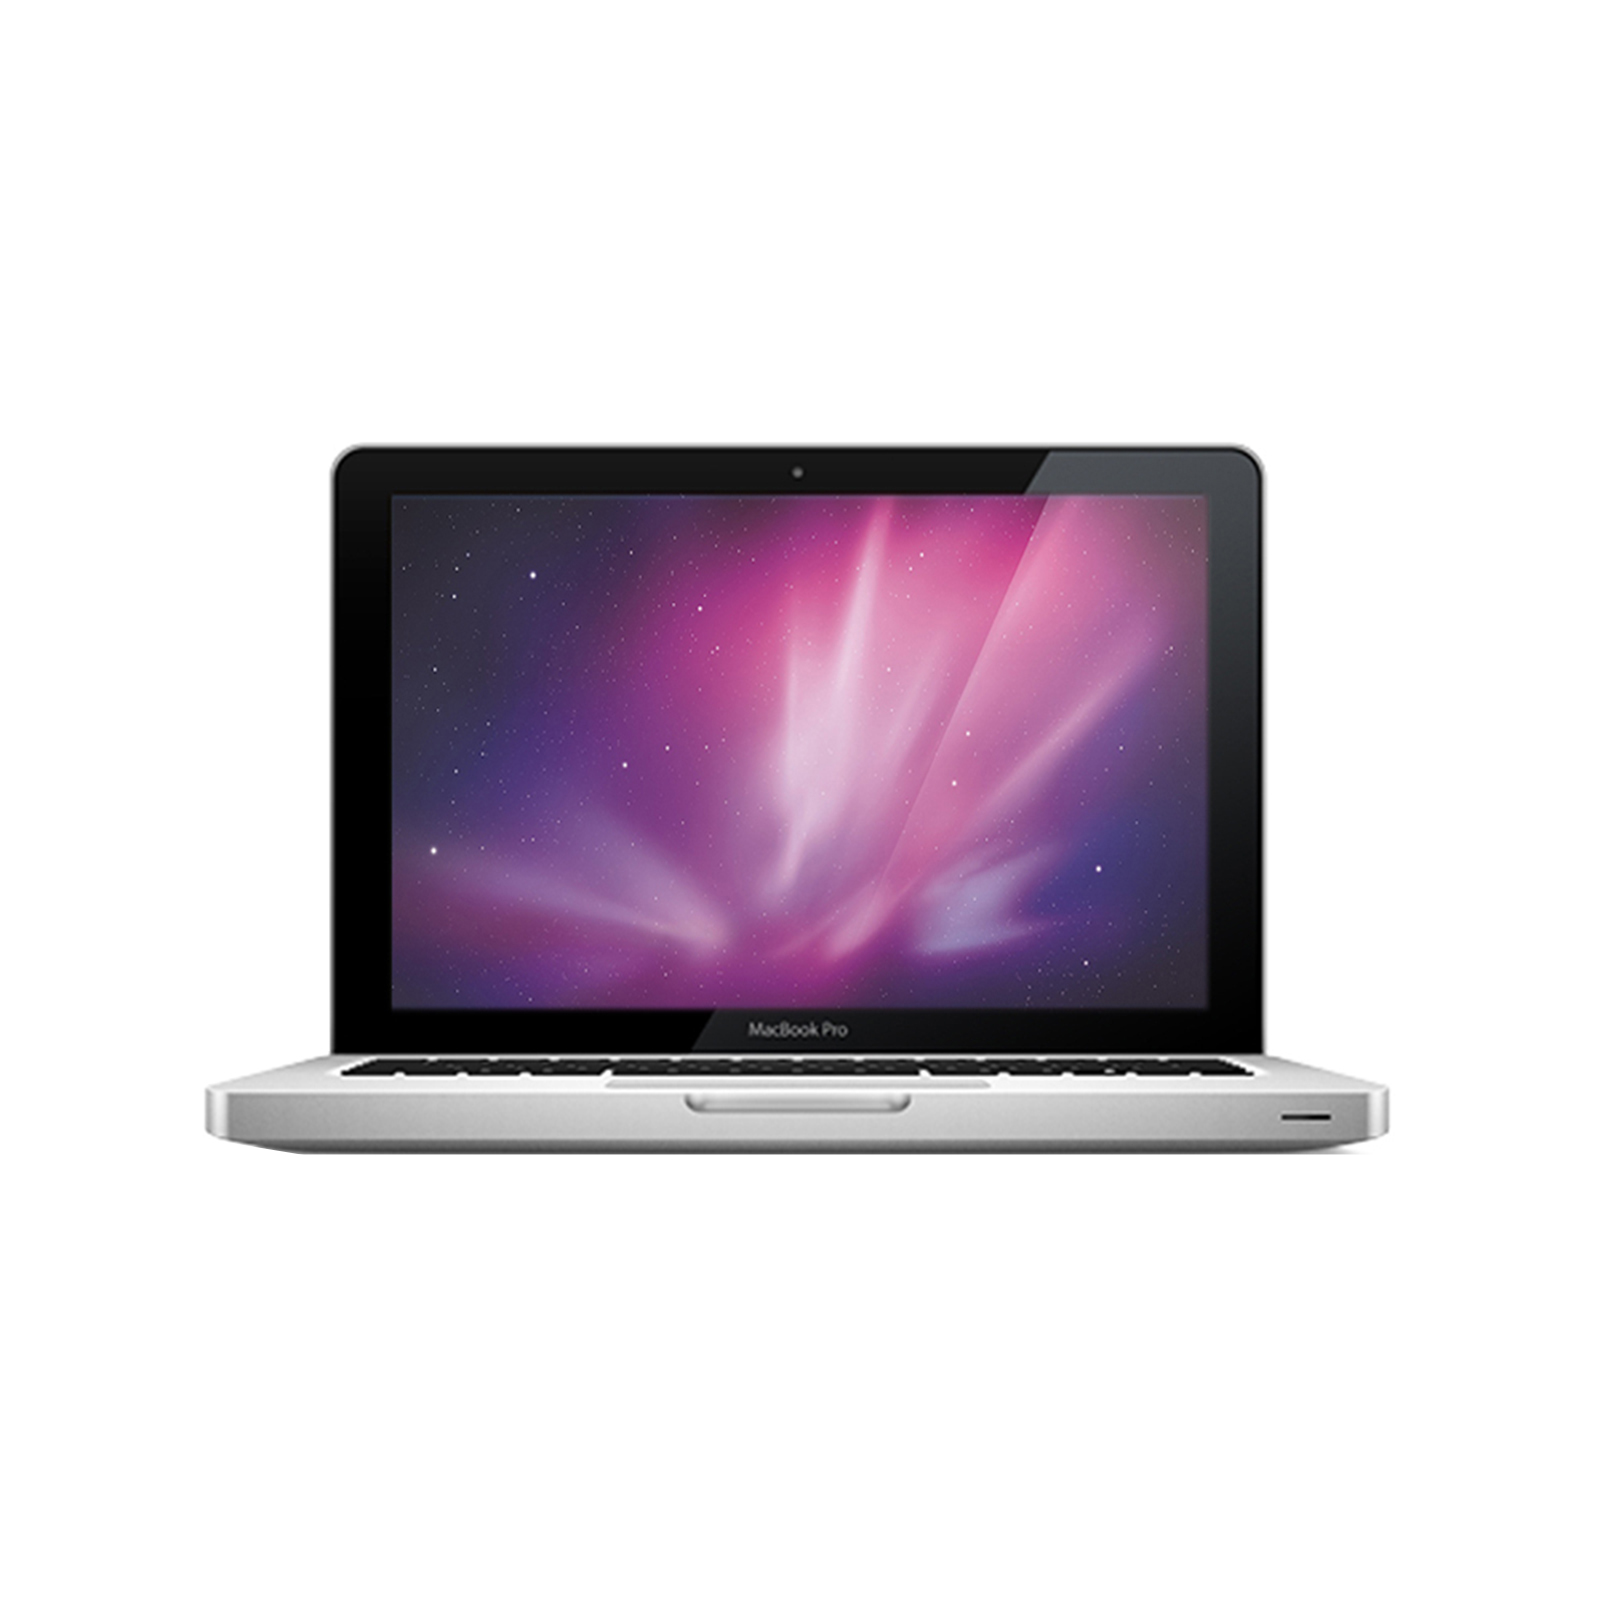 MacBook Pro (15-inch, Late 2011) Intel Core i7 2.2 GHz 8GB 500GB